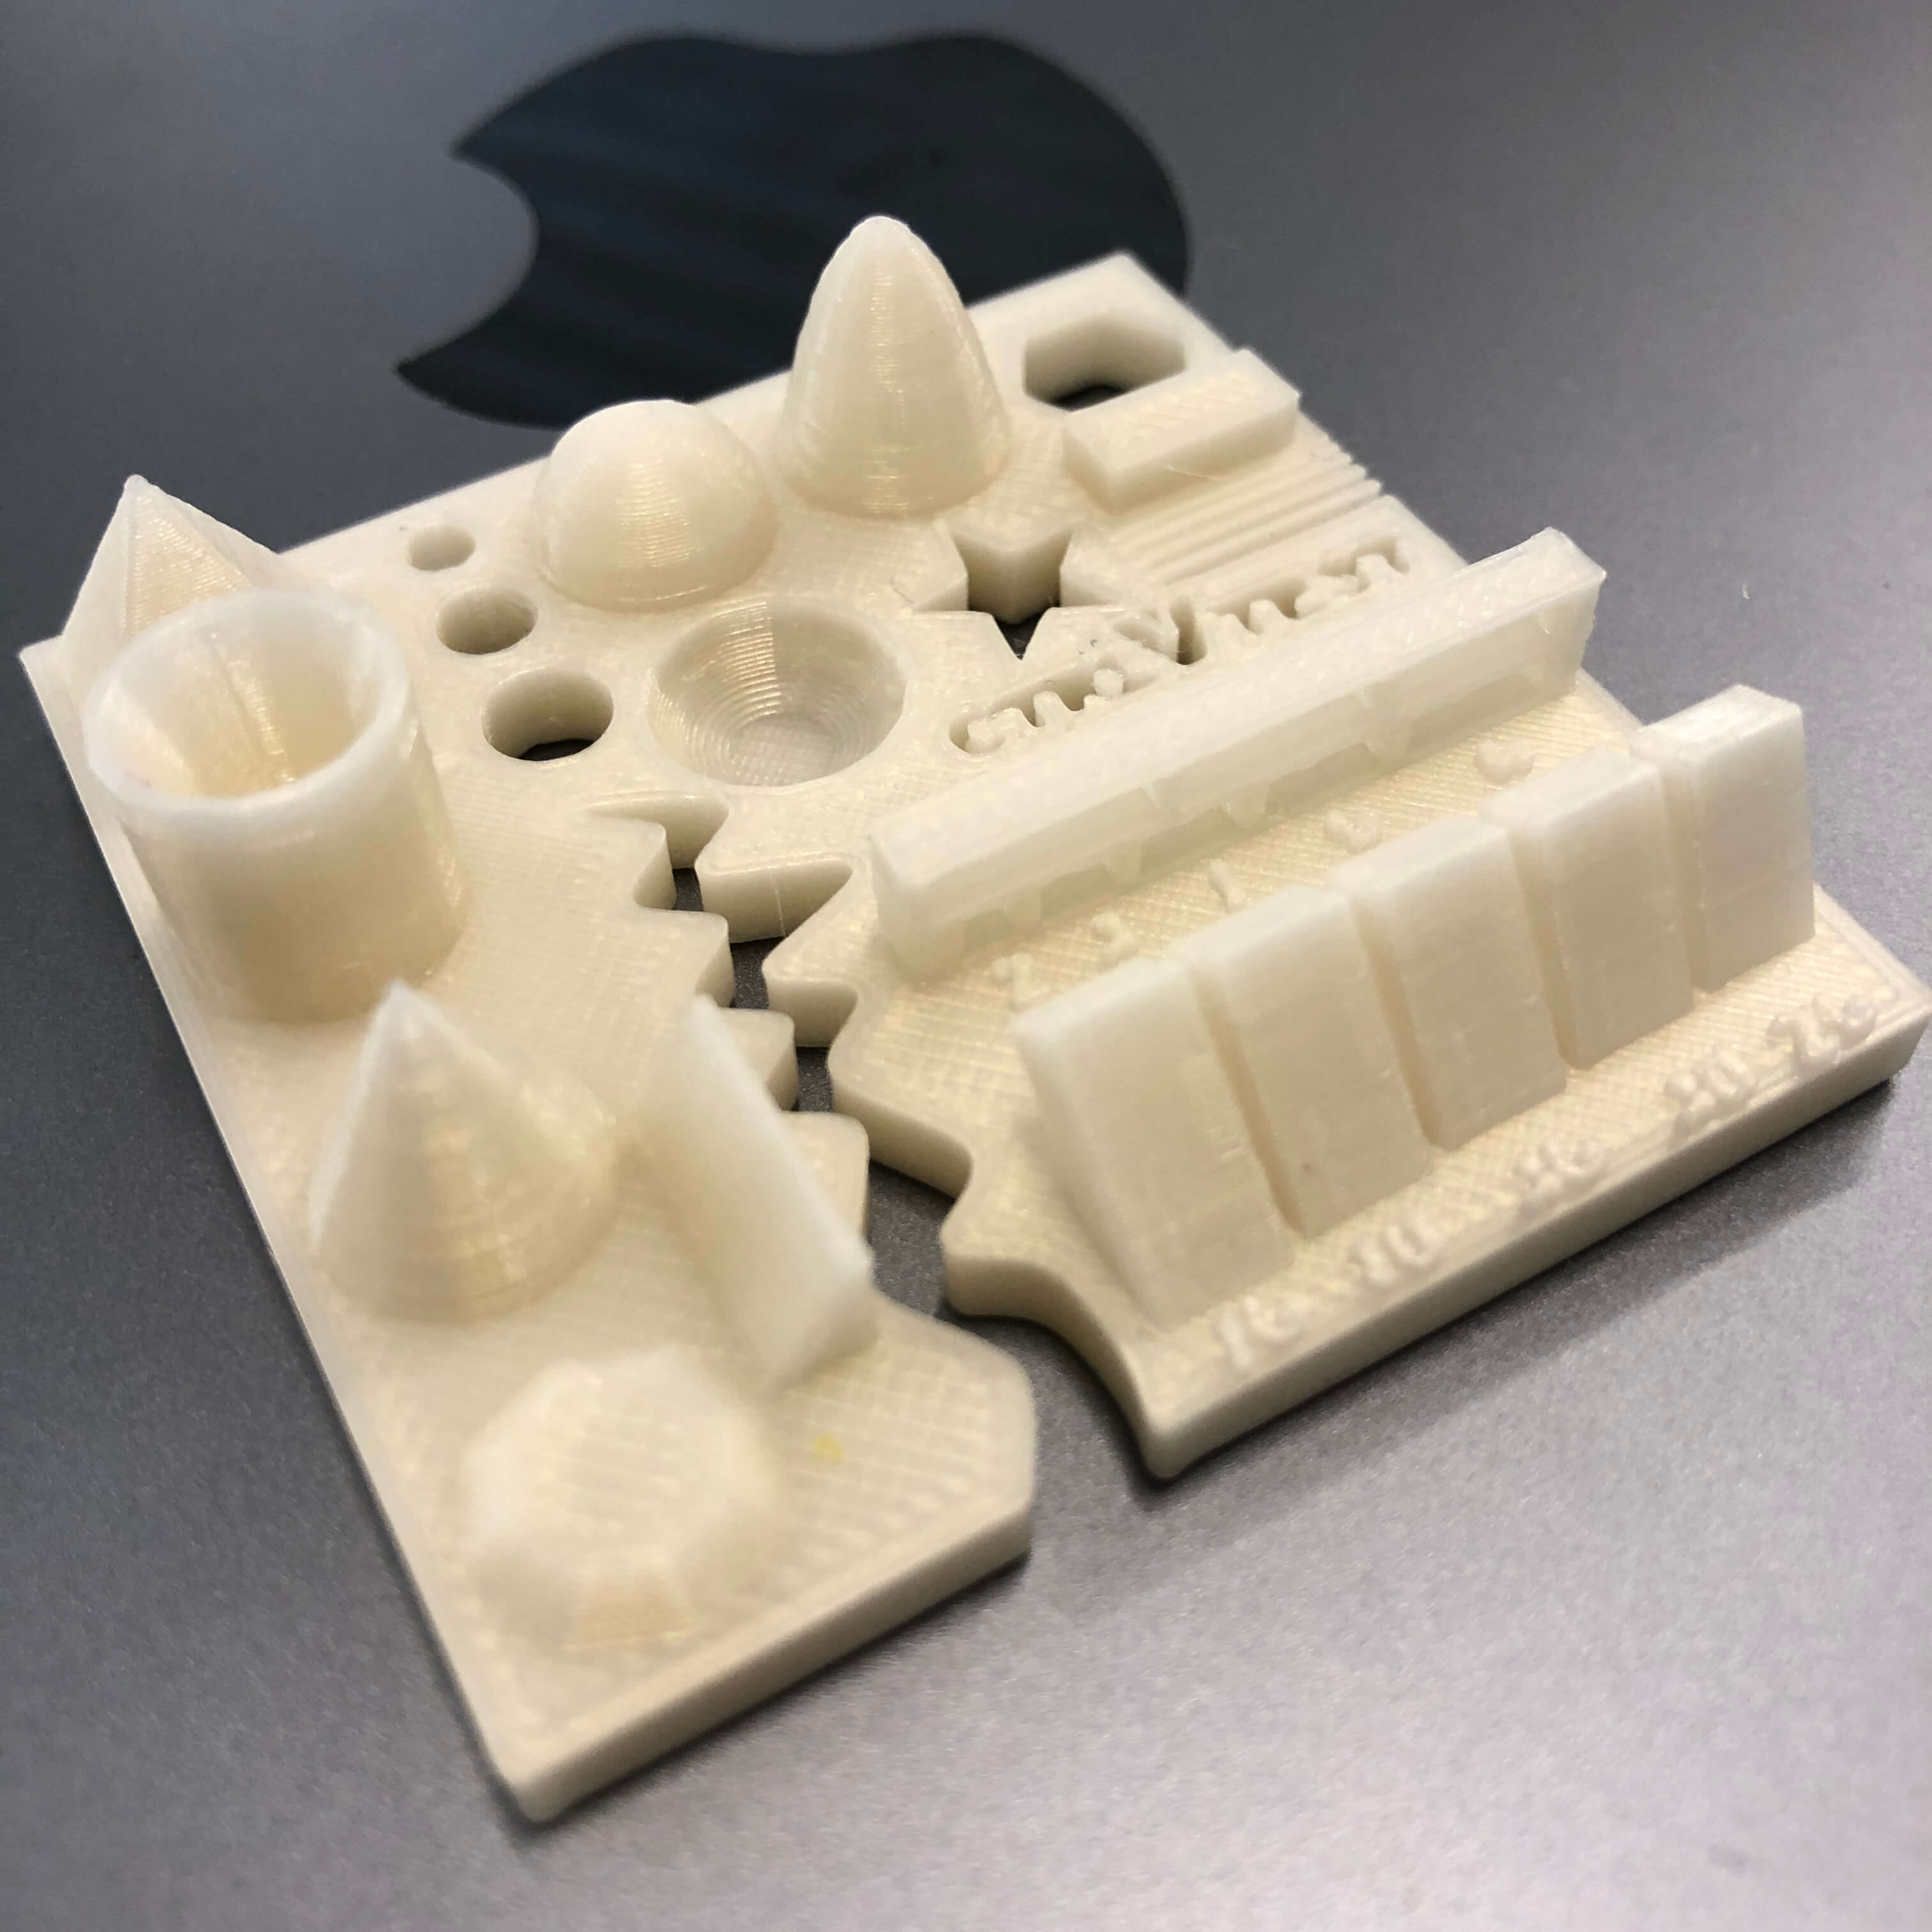 3D print of calibration file